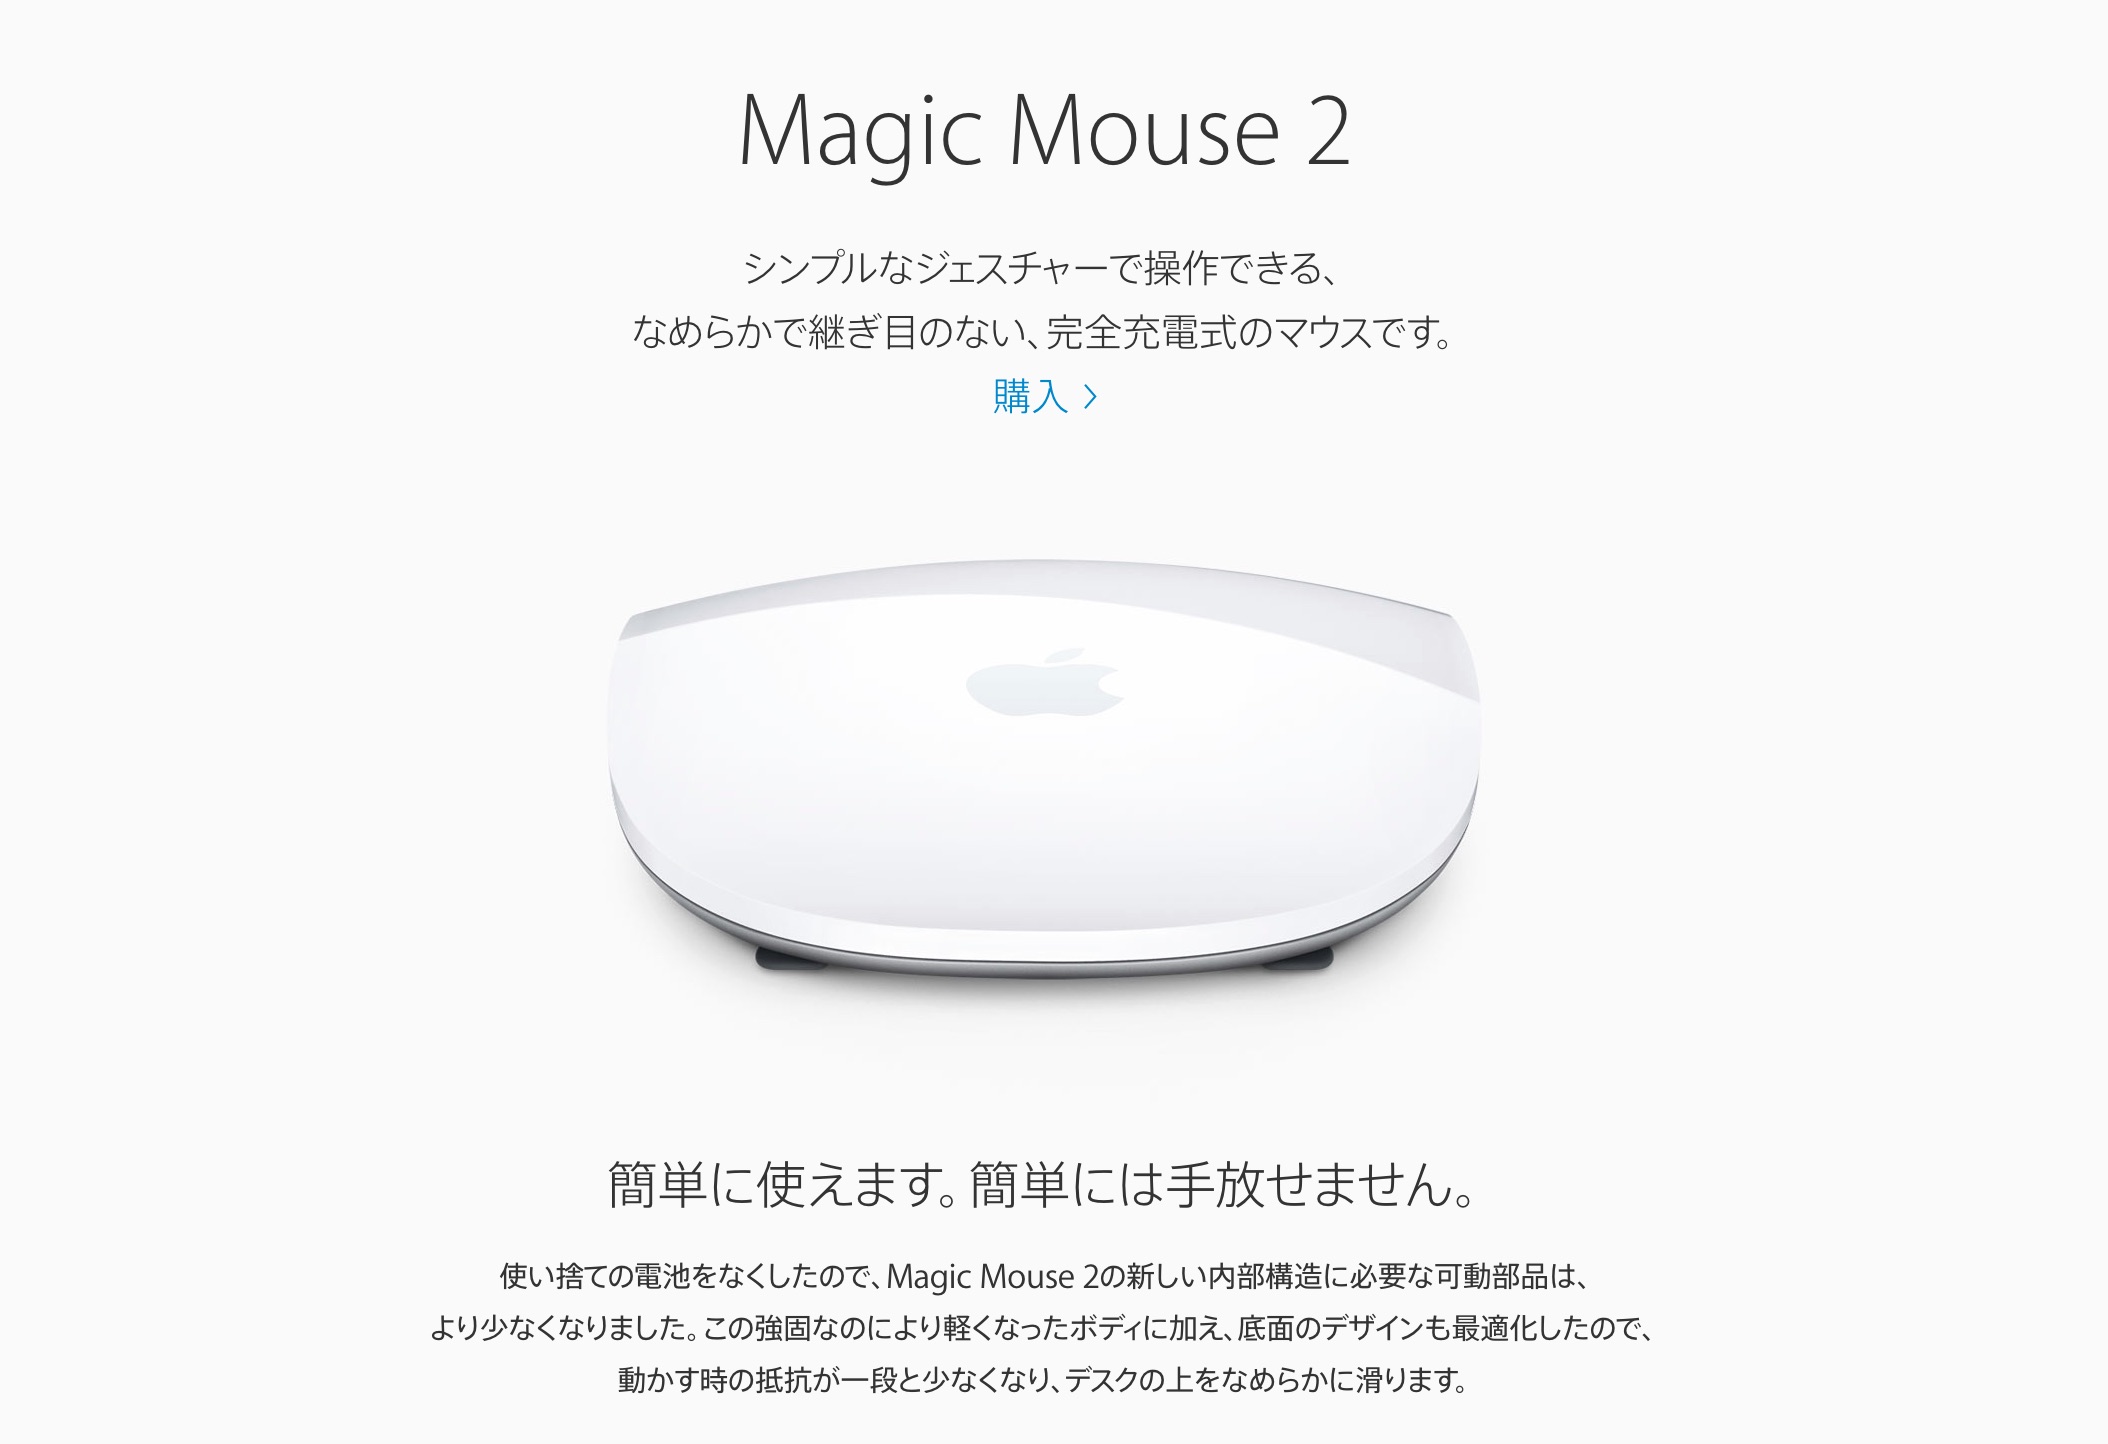 Magc-Mouse-2-Hero